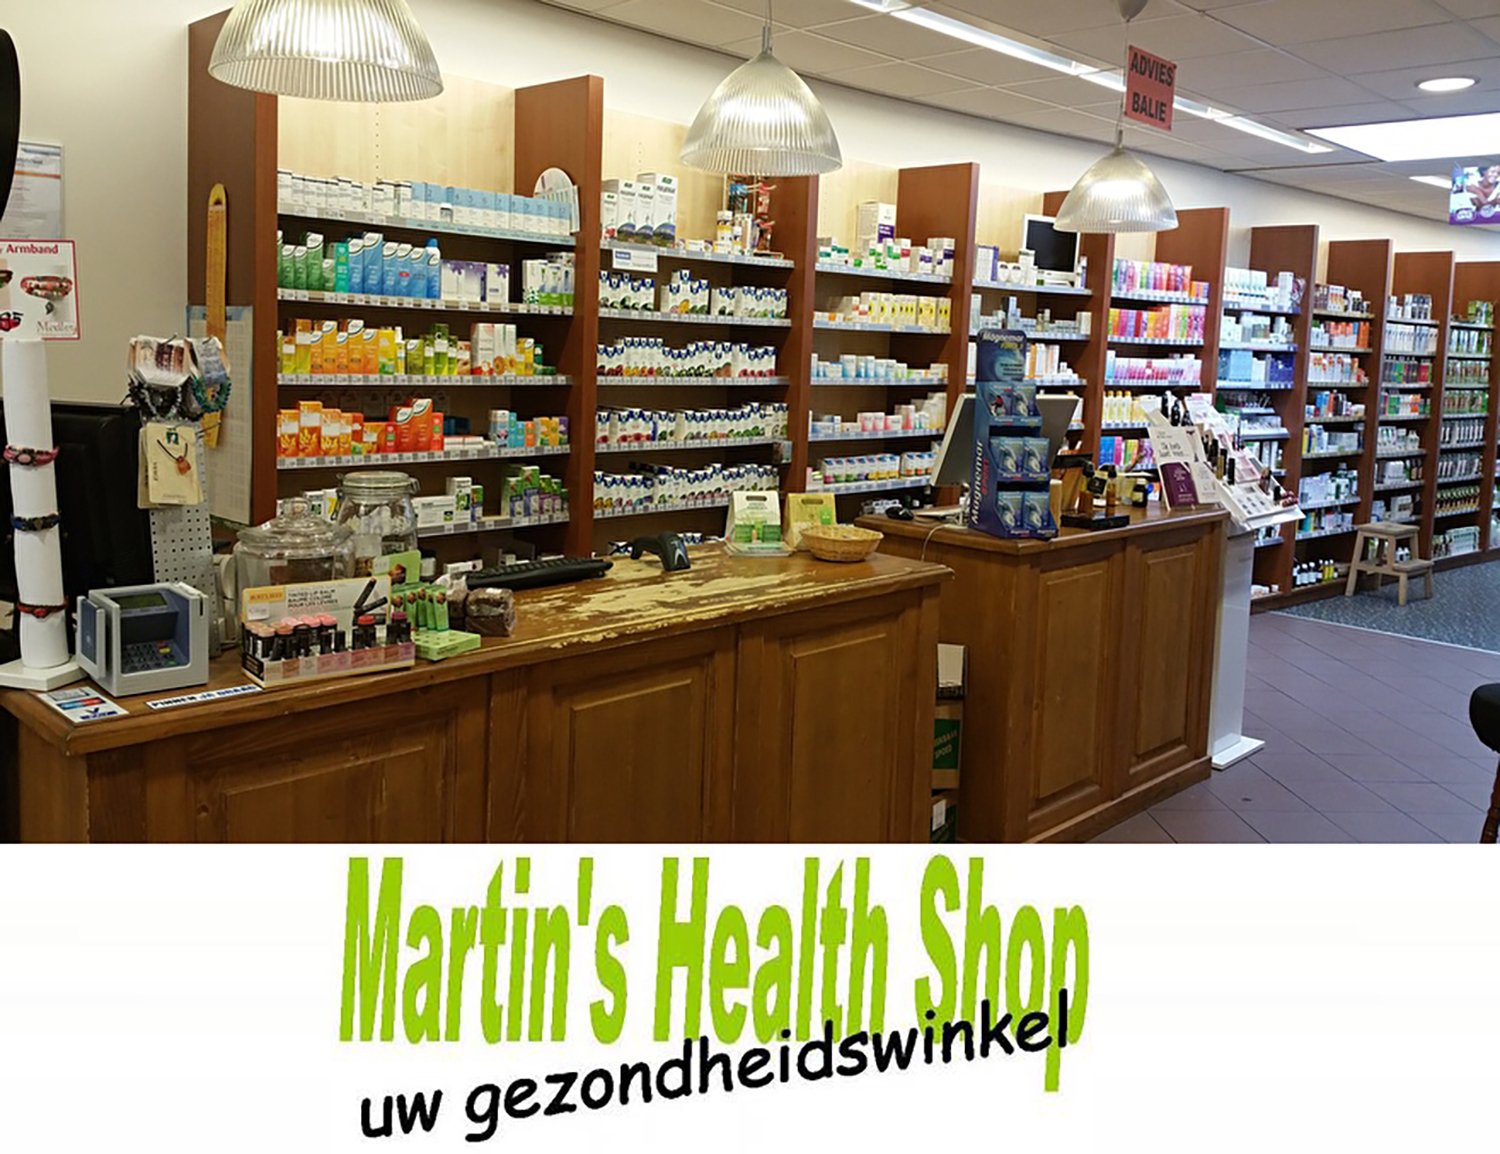 24 2019 martins health shop